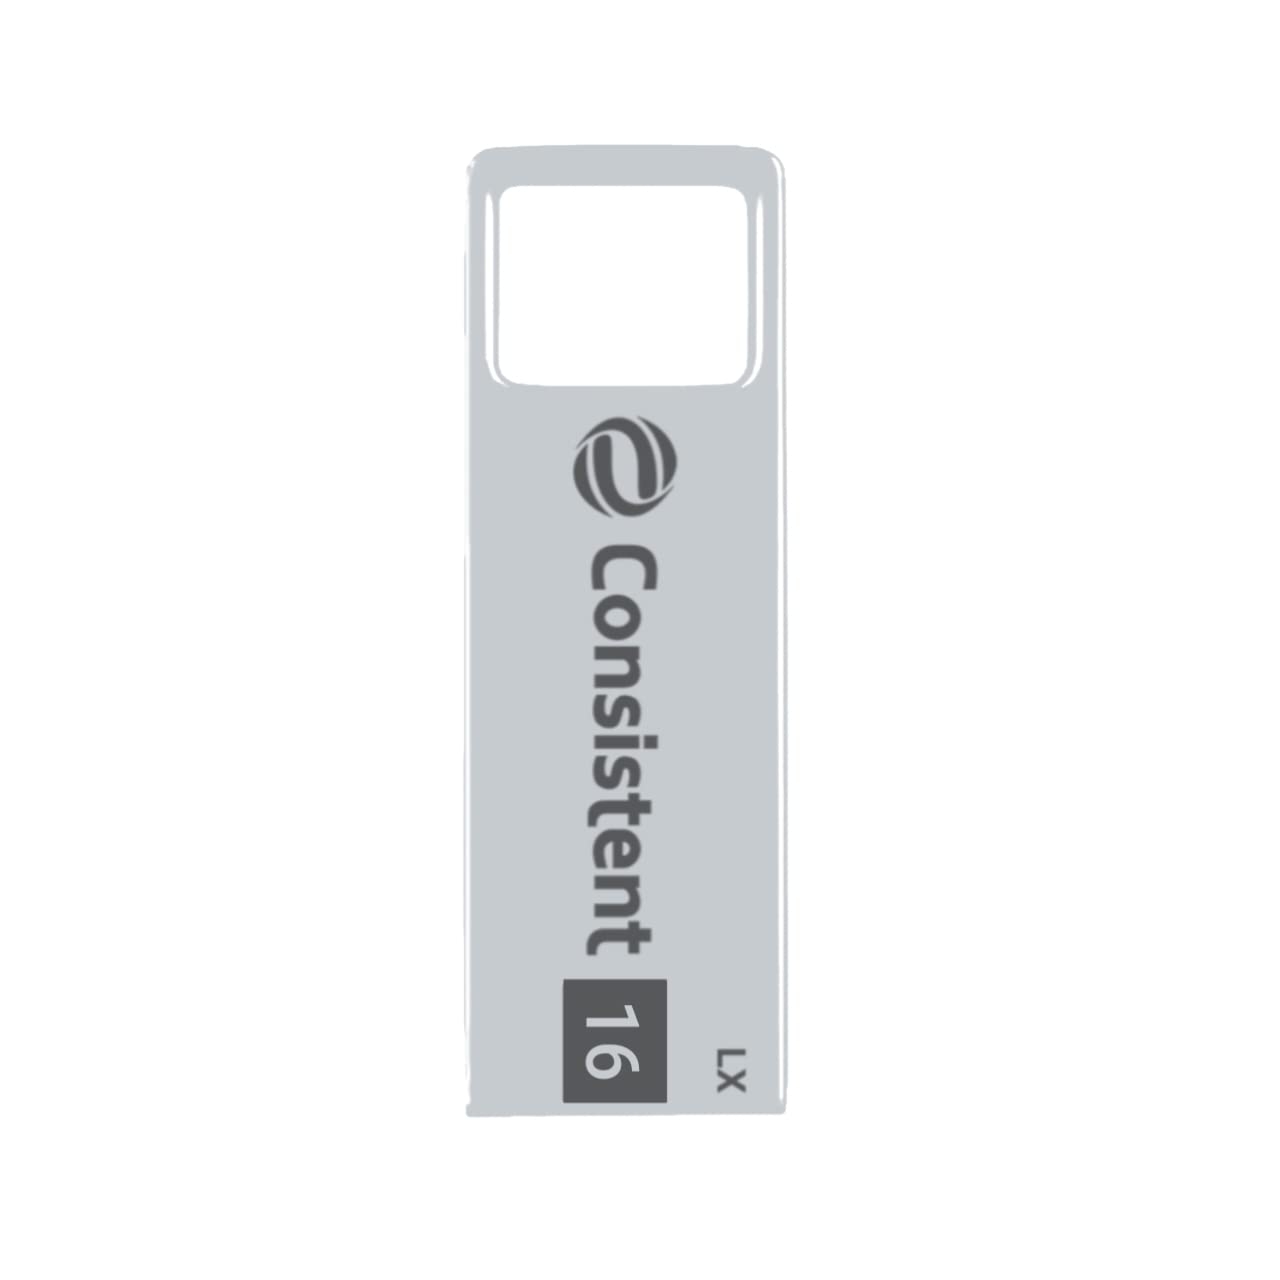 Consistent 16GB USB 2.0 Pen Drive Stylish Metal Body